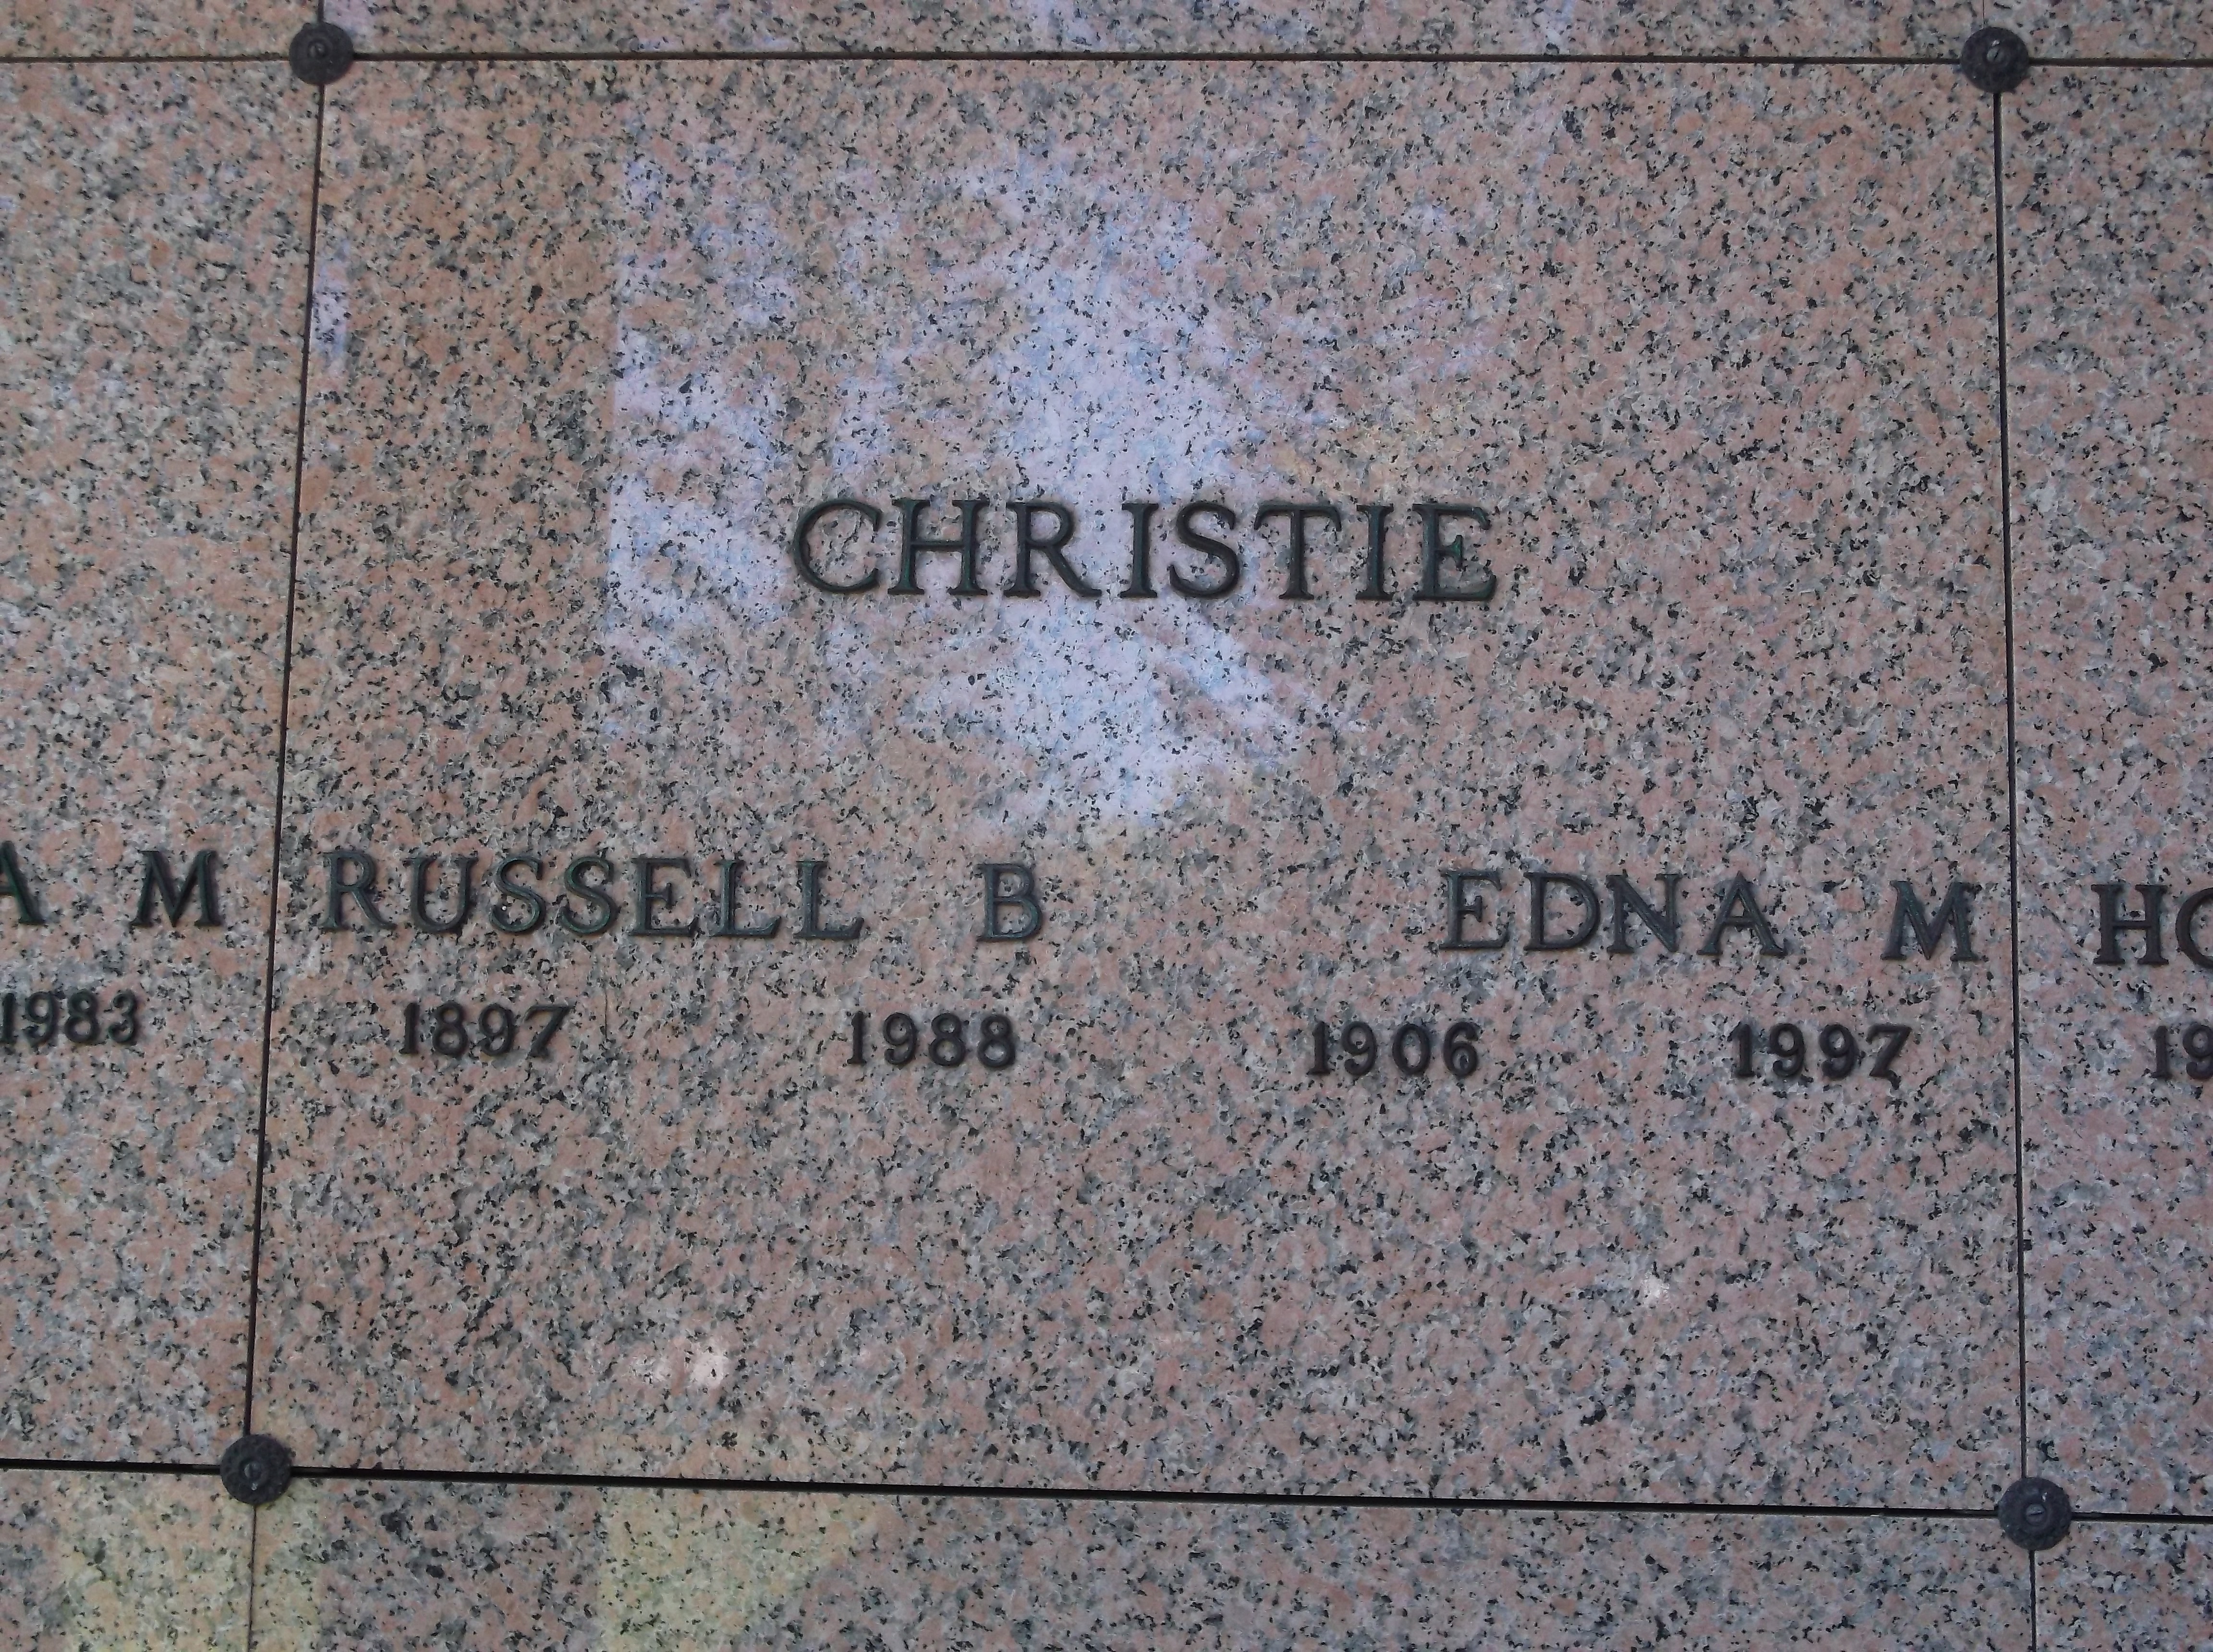 Edna M Christie